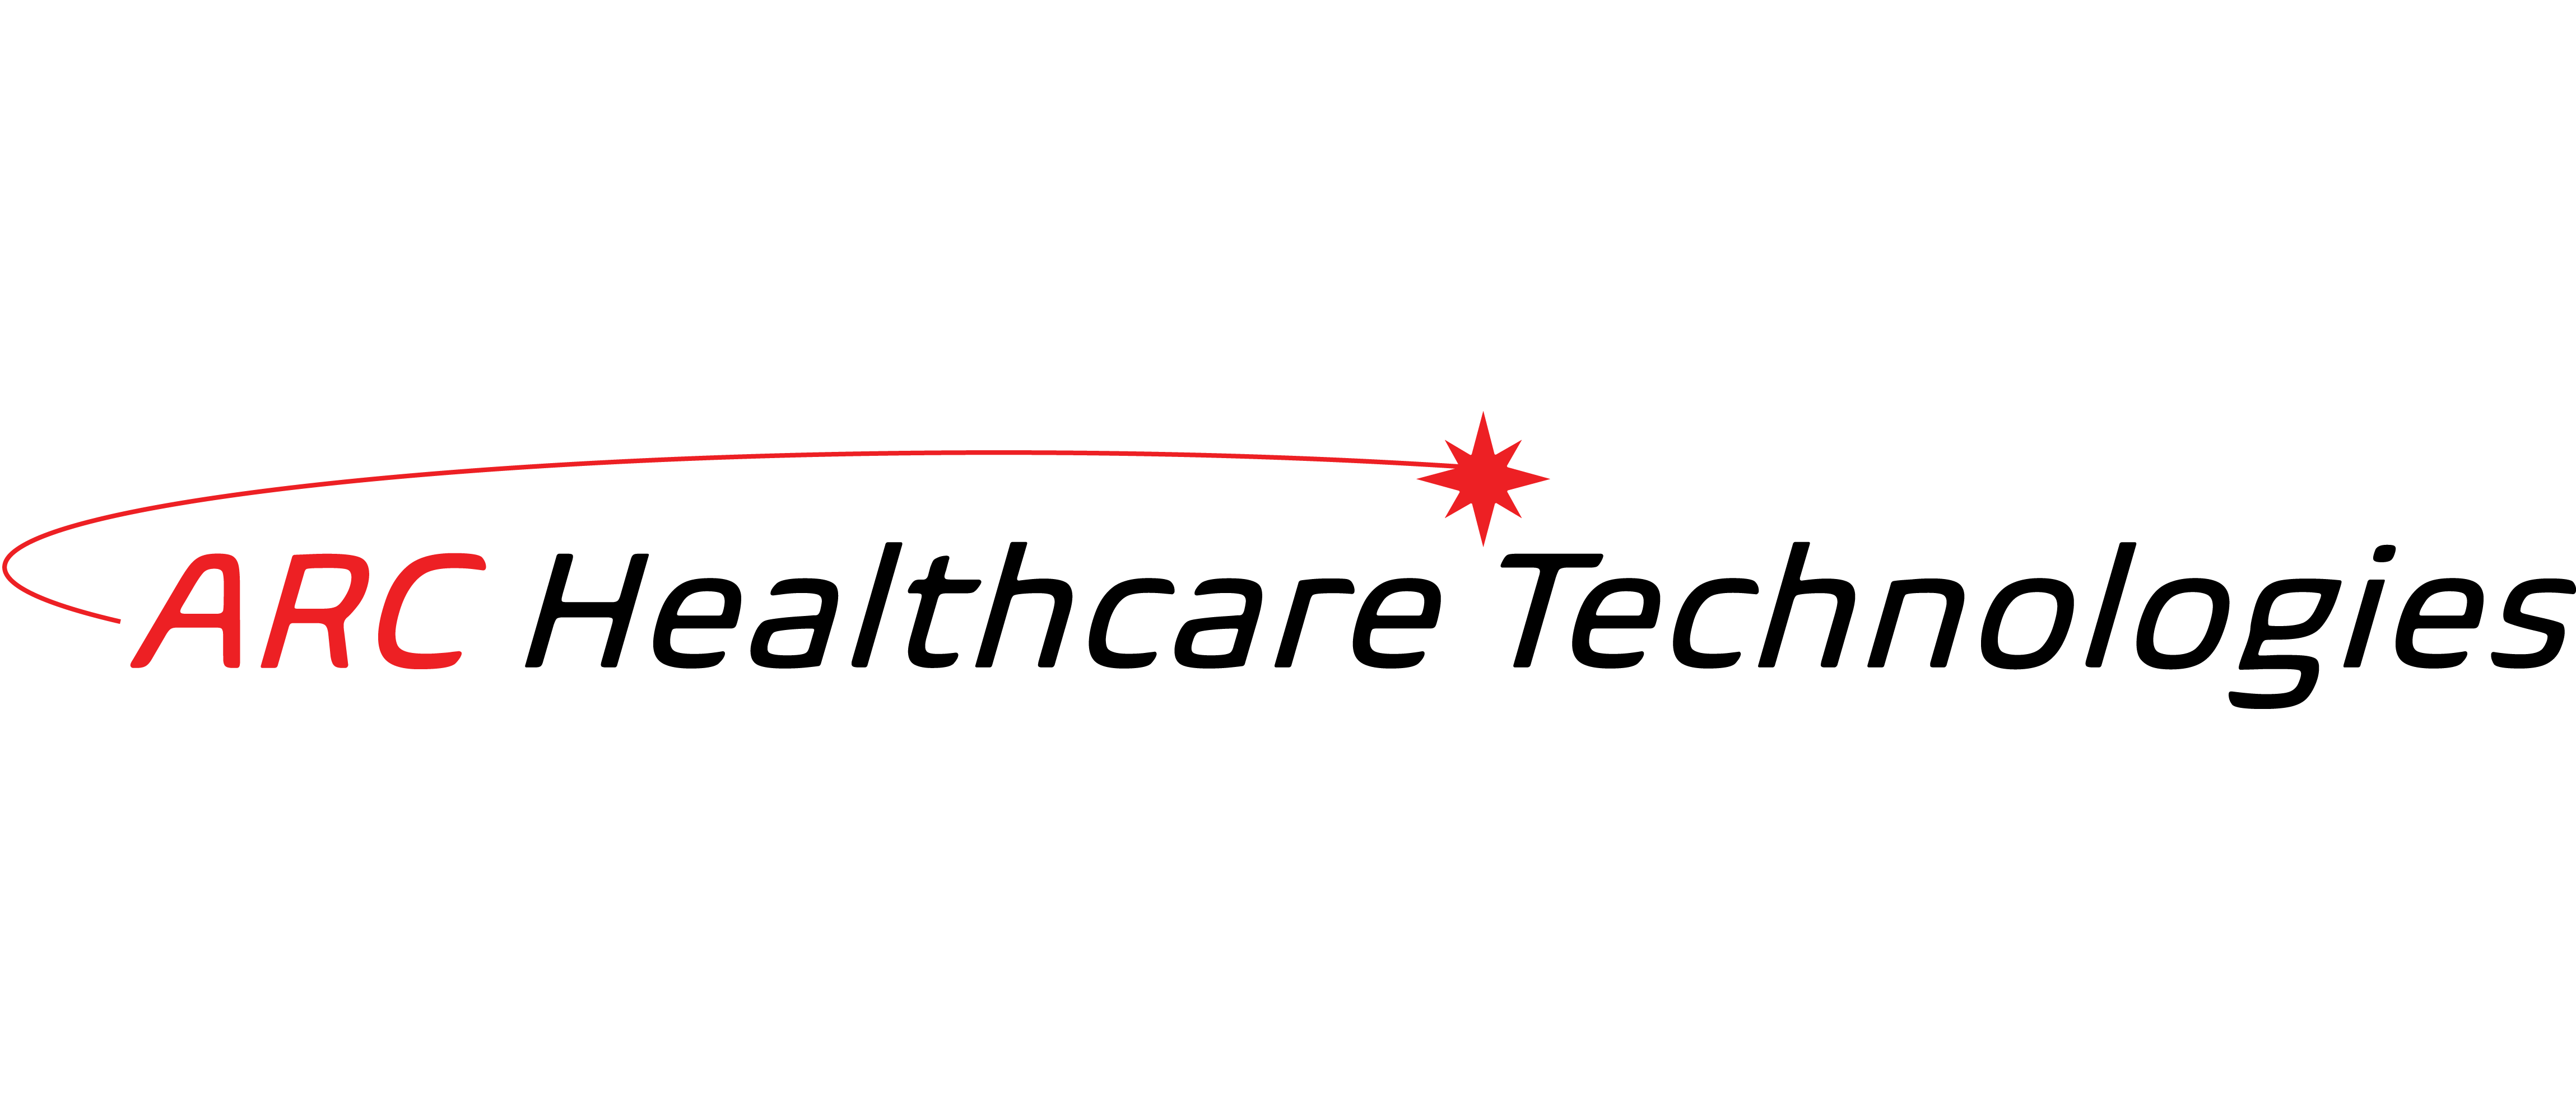 Arc Healthcare Technologies logo